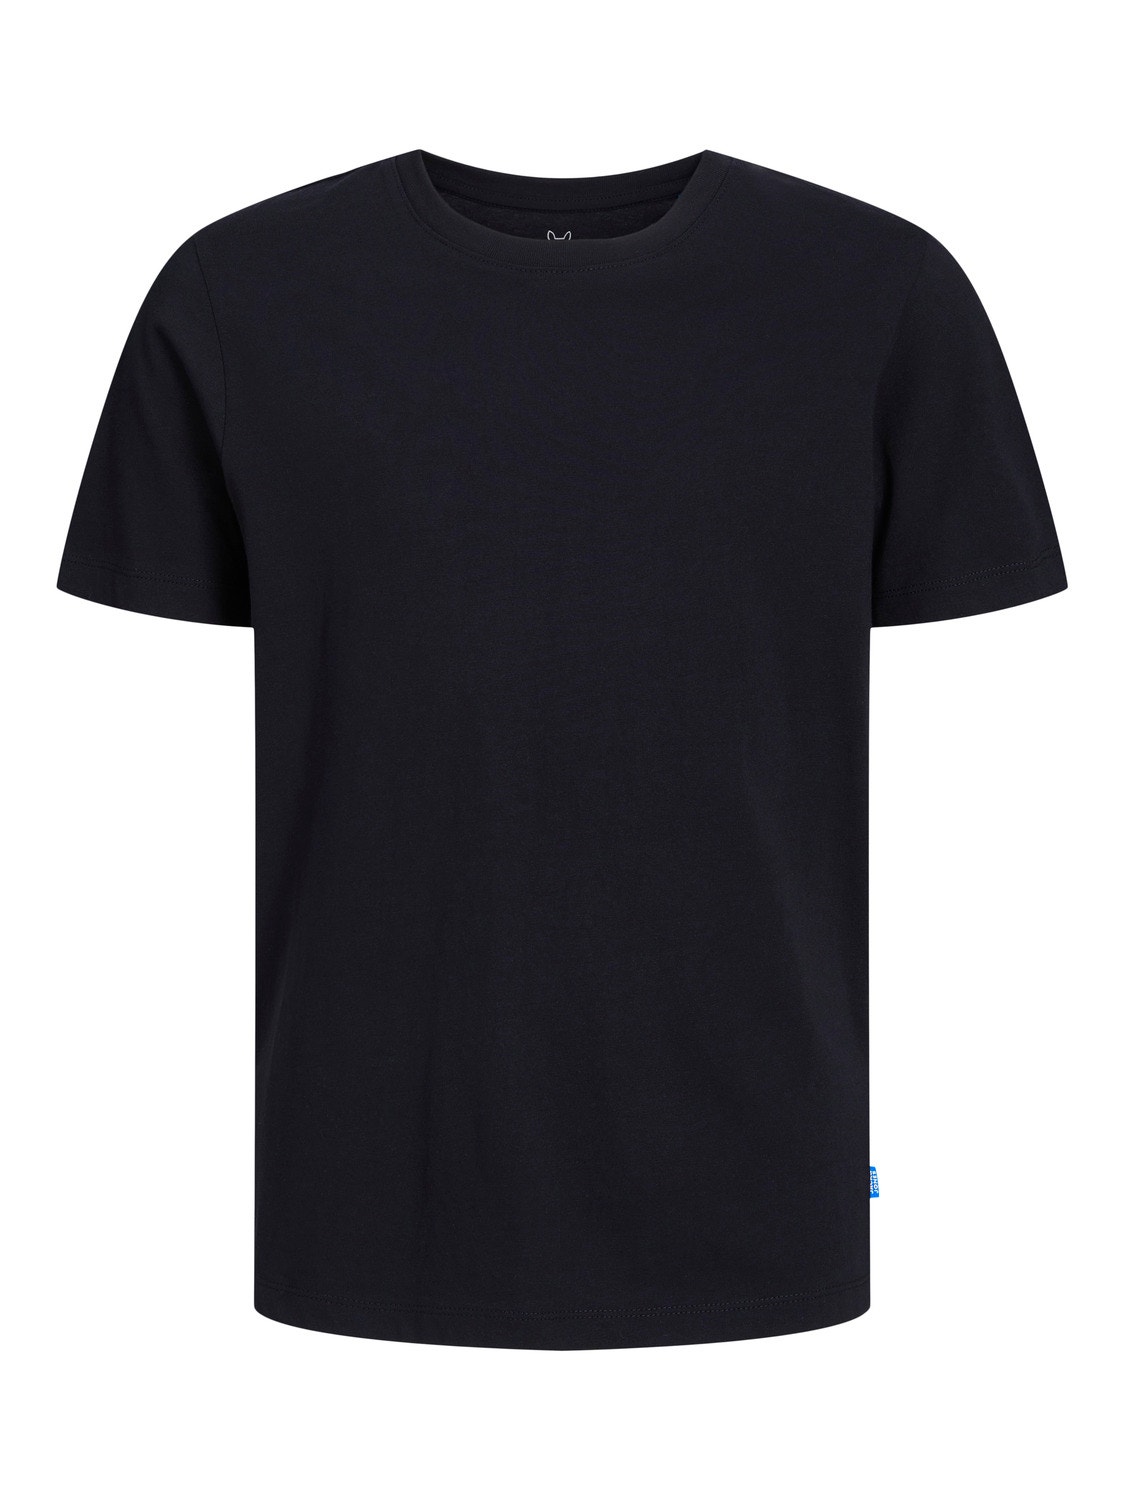 Jack & Jones T-shirt Semplice Mini -Black - 12257380